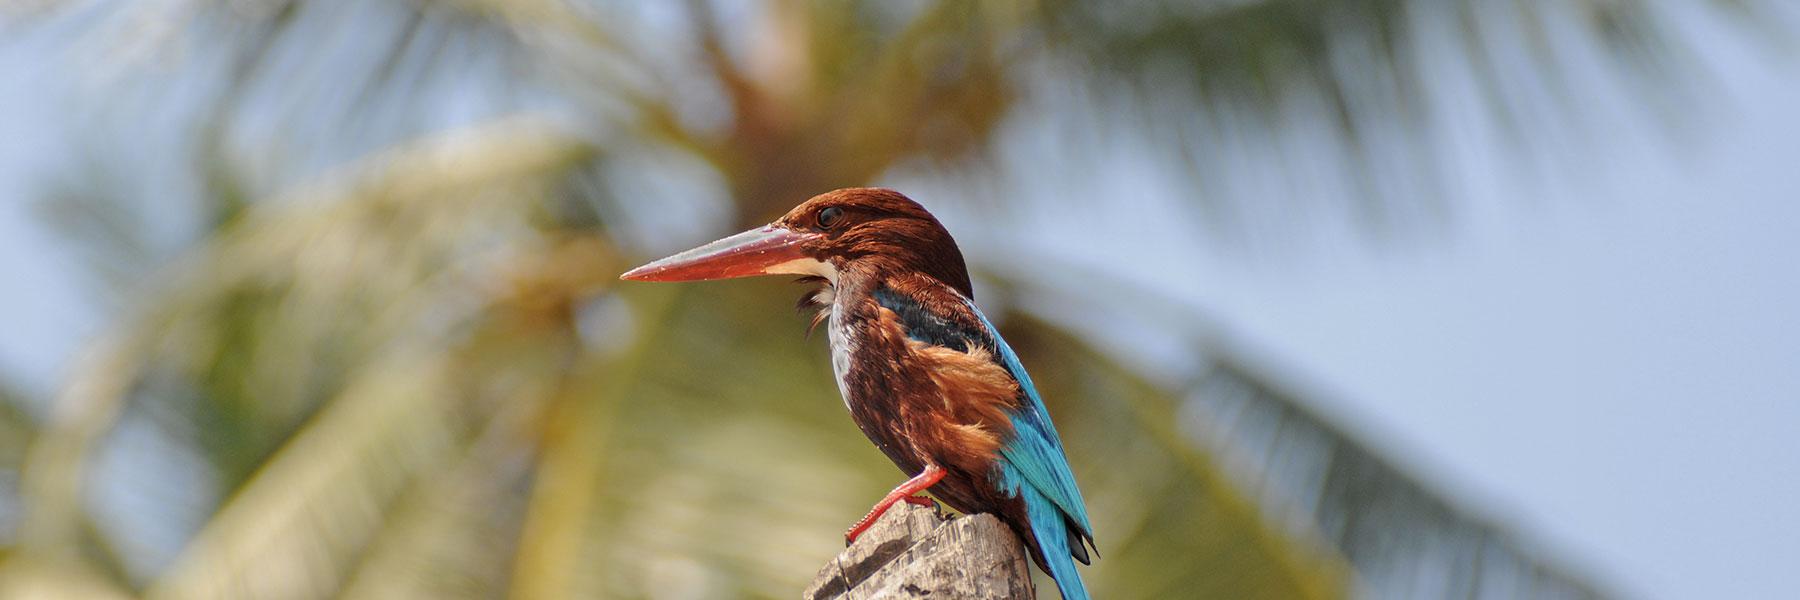 Birdlife and Natural Wealth of Sri Lanka